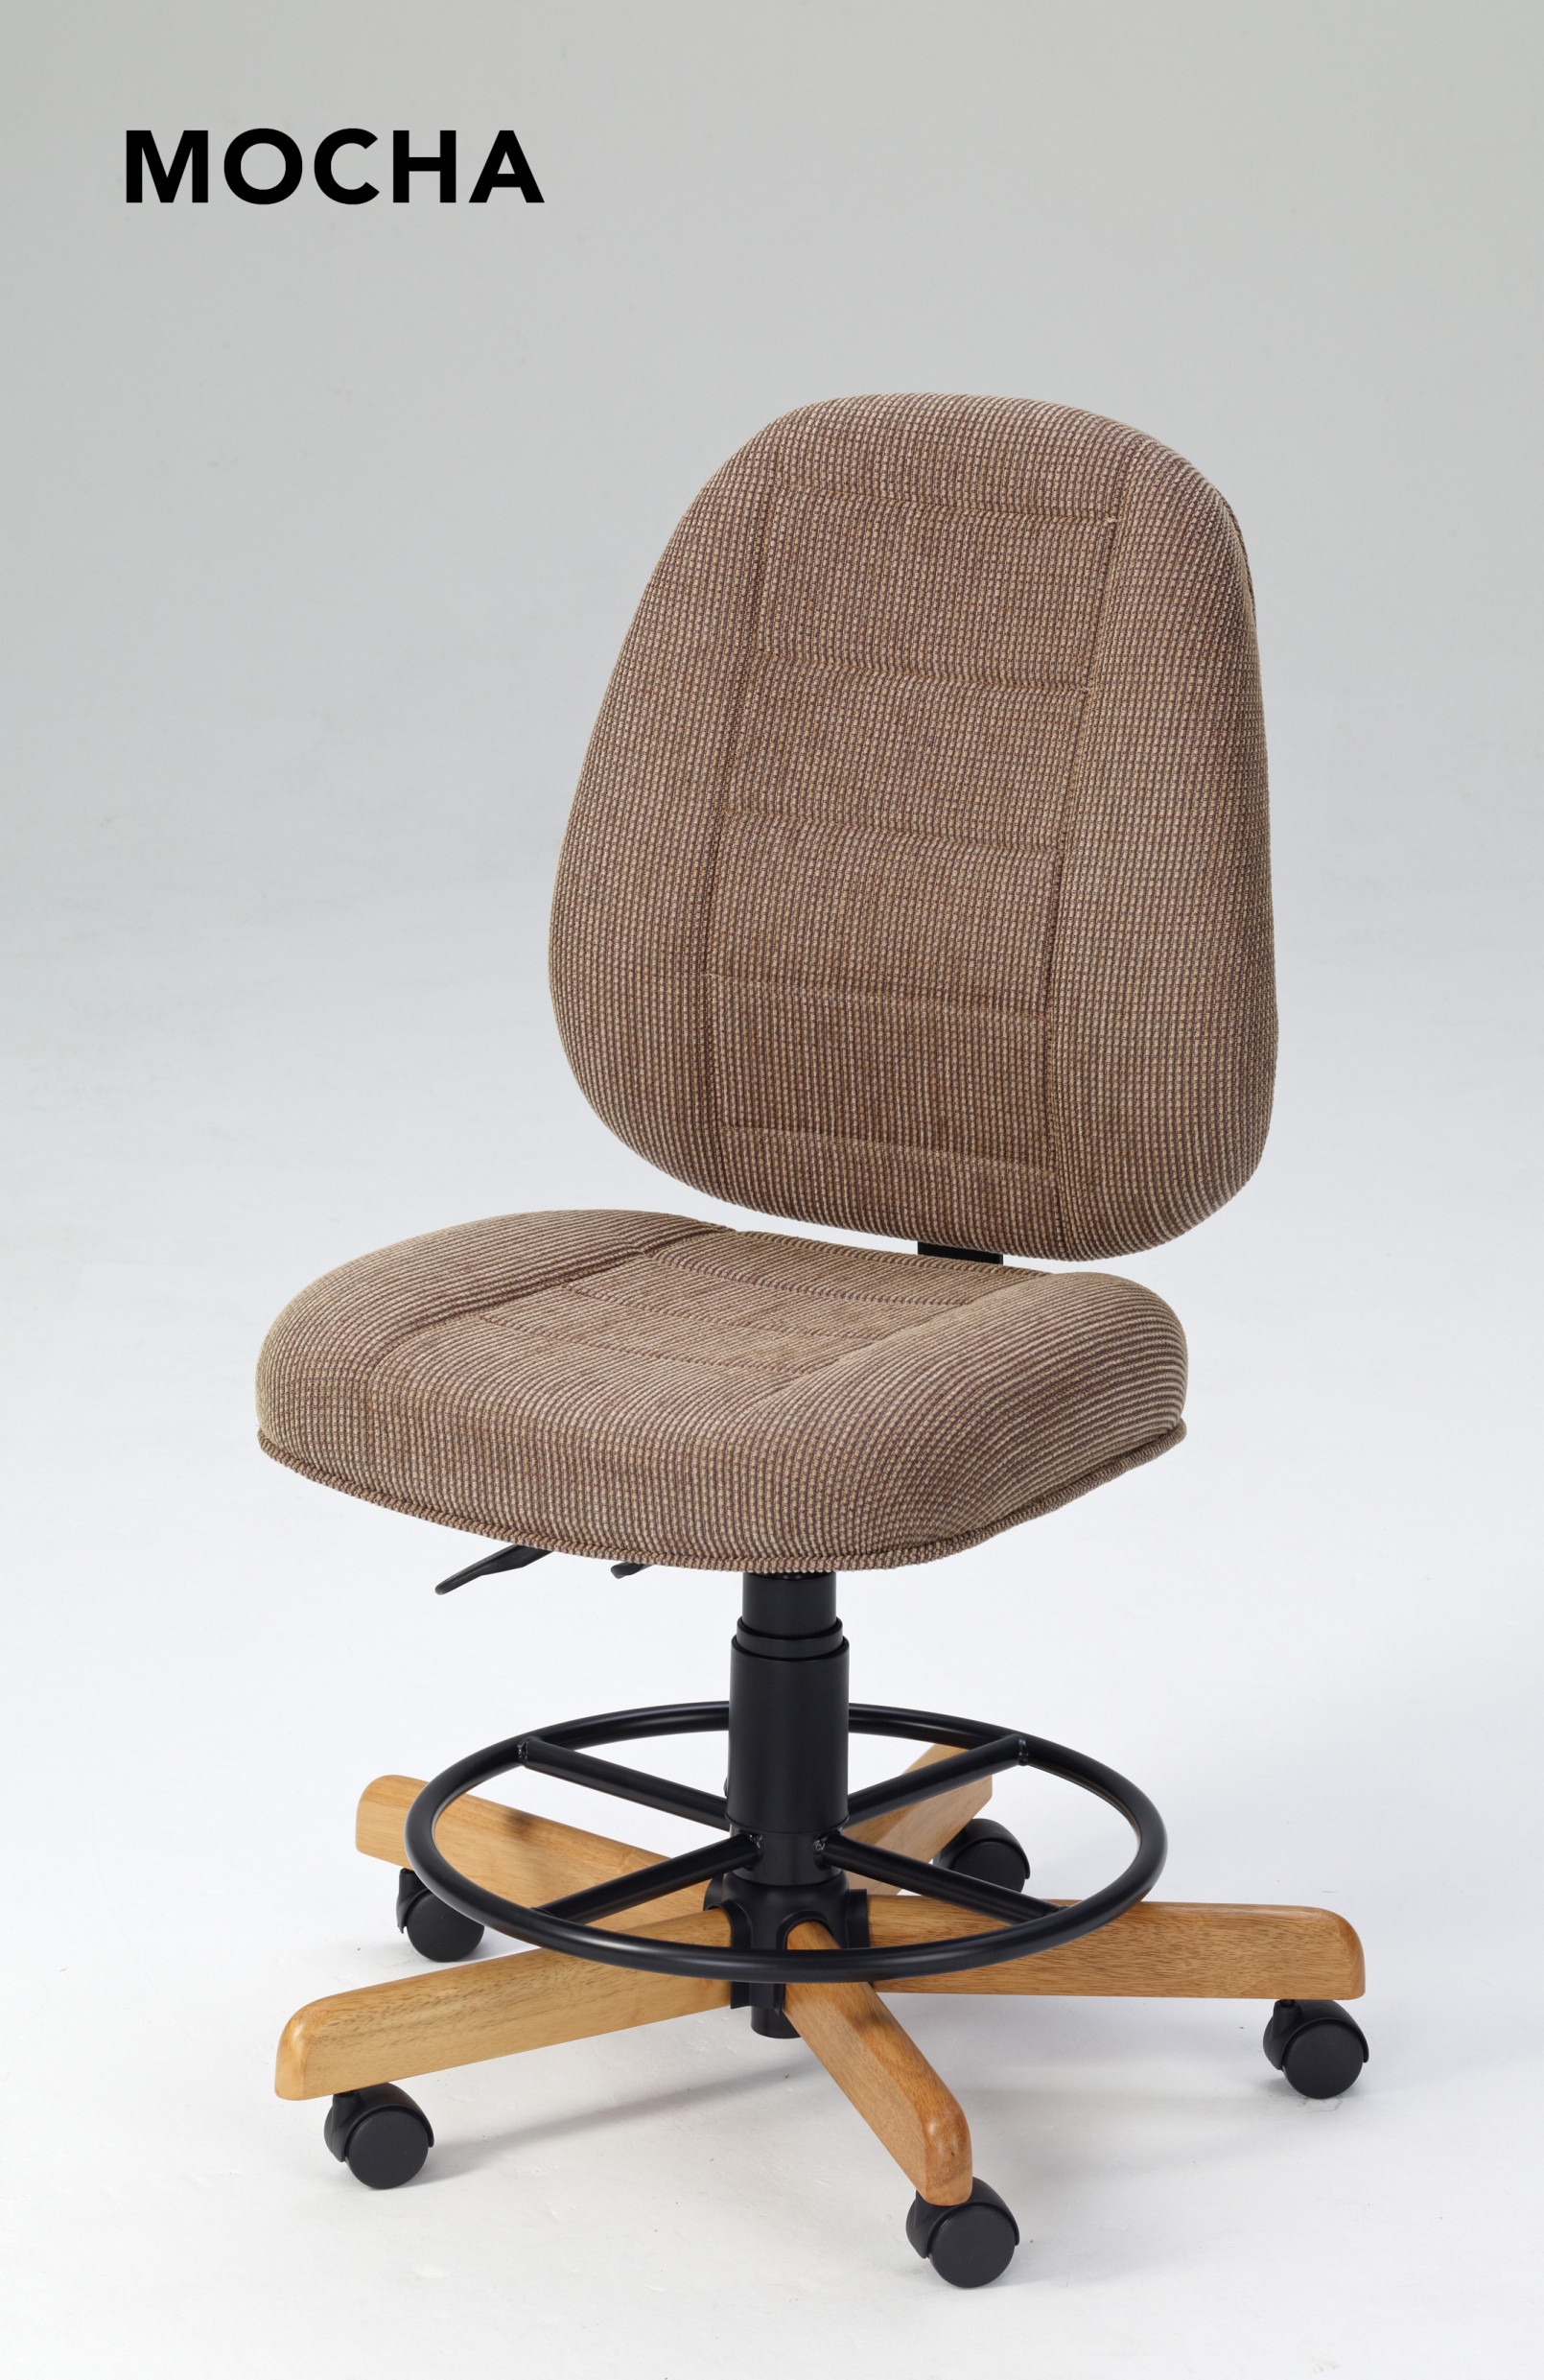 Sewing Chair - Sewing Room Furniture | Koala Studios